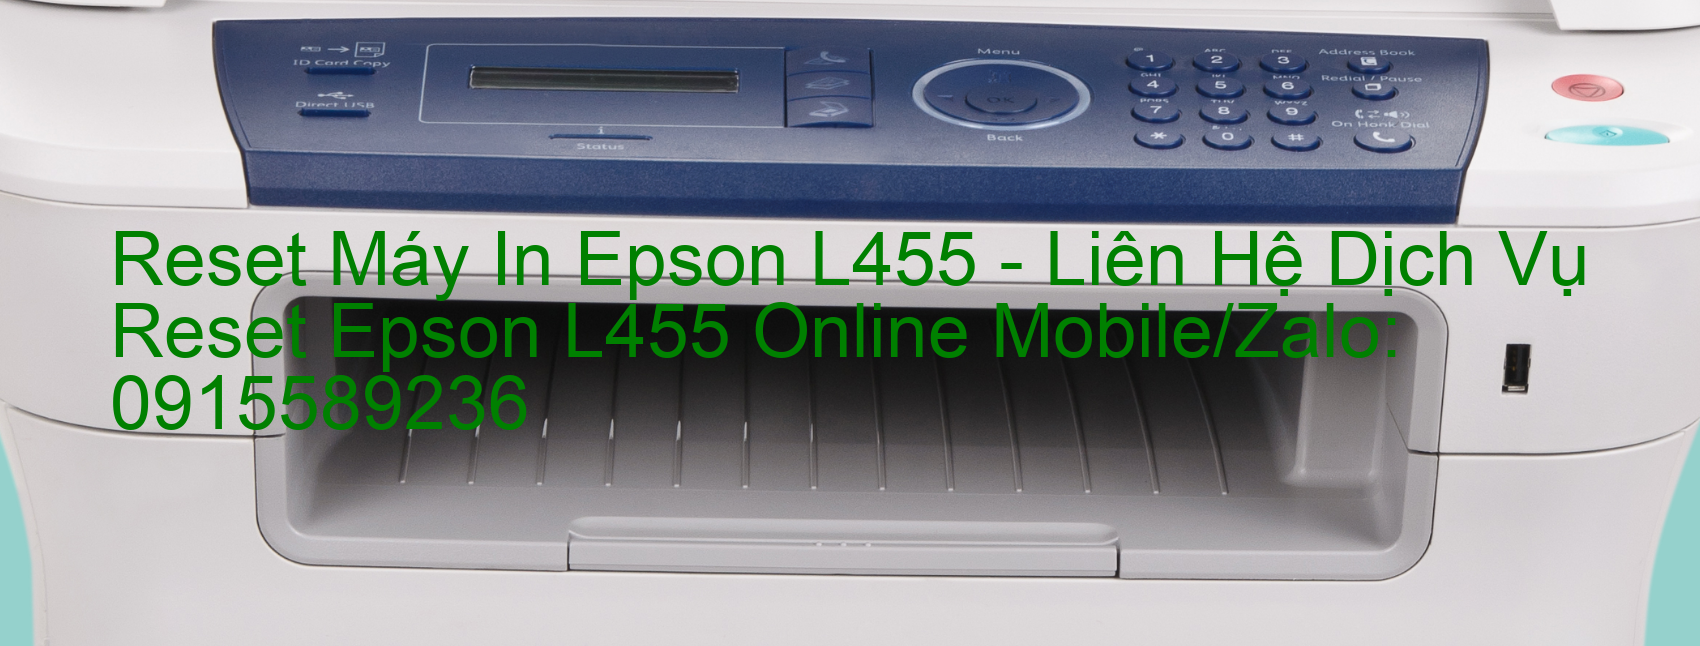 Reset Máy In Epson L455 Online